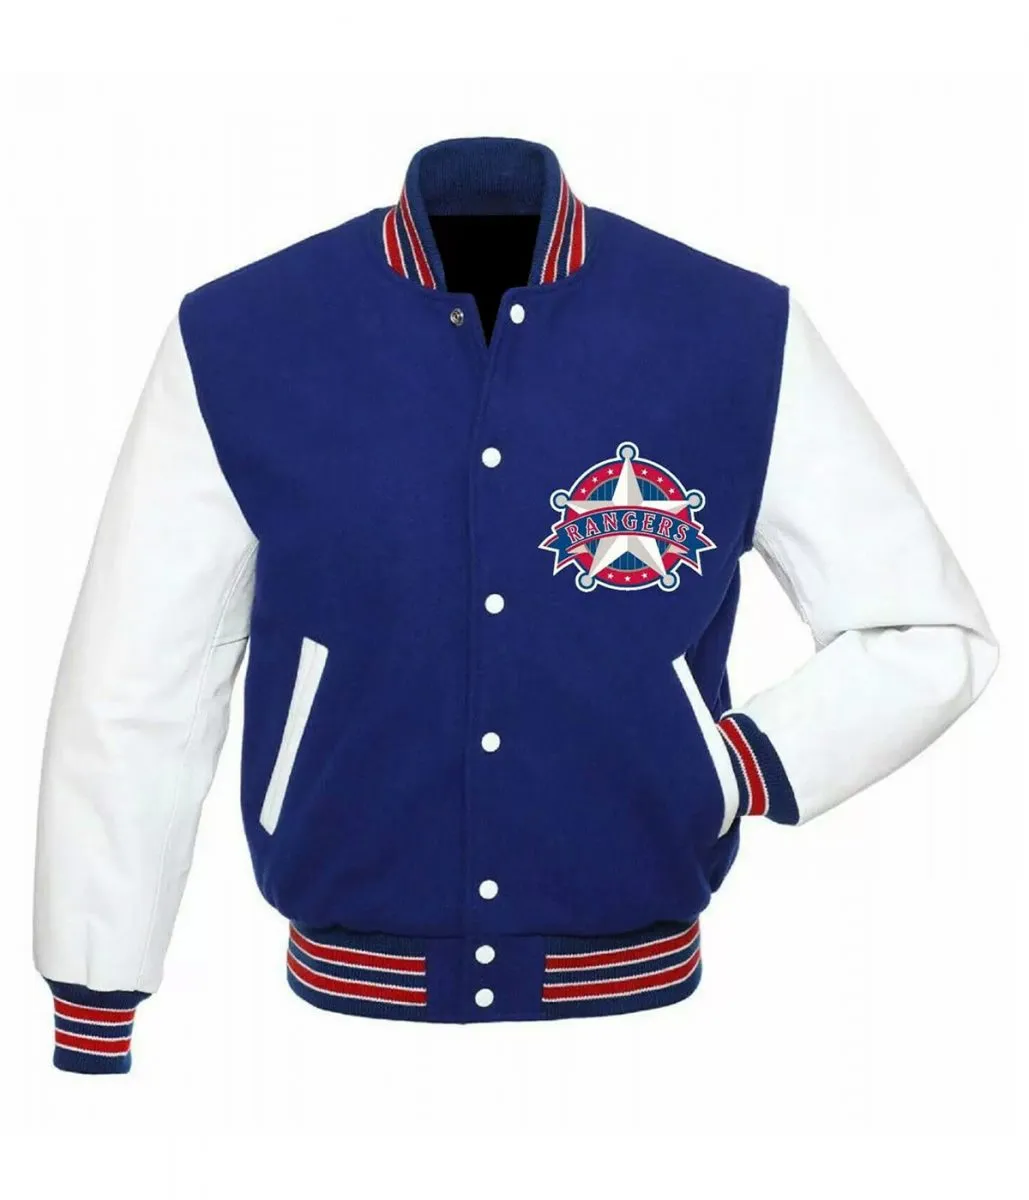 Texas Rangers White and Blue Varsity Jacket